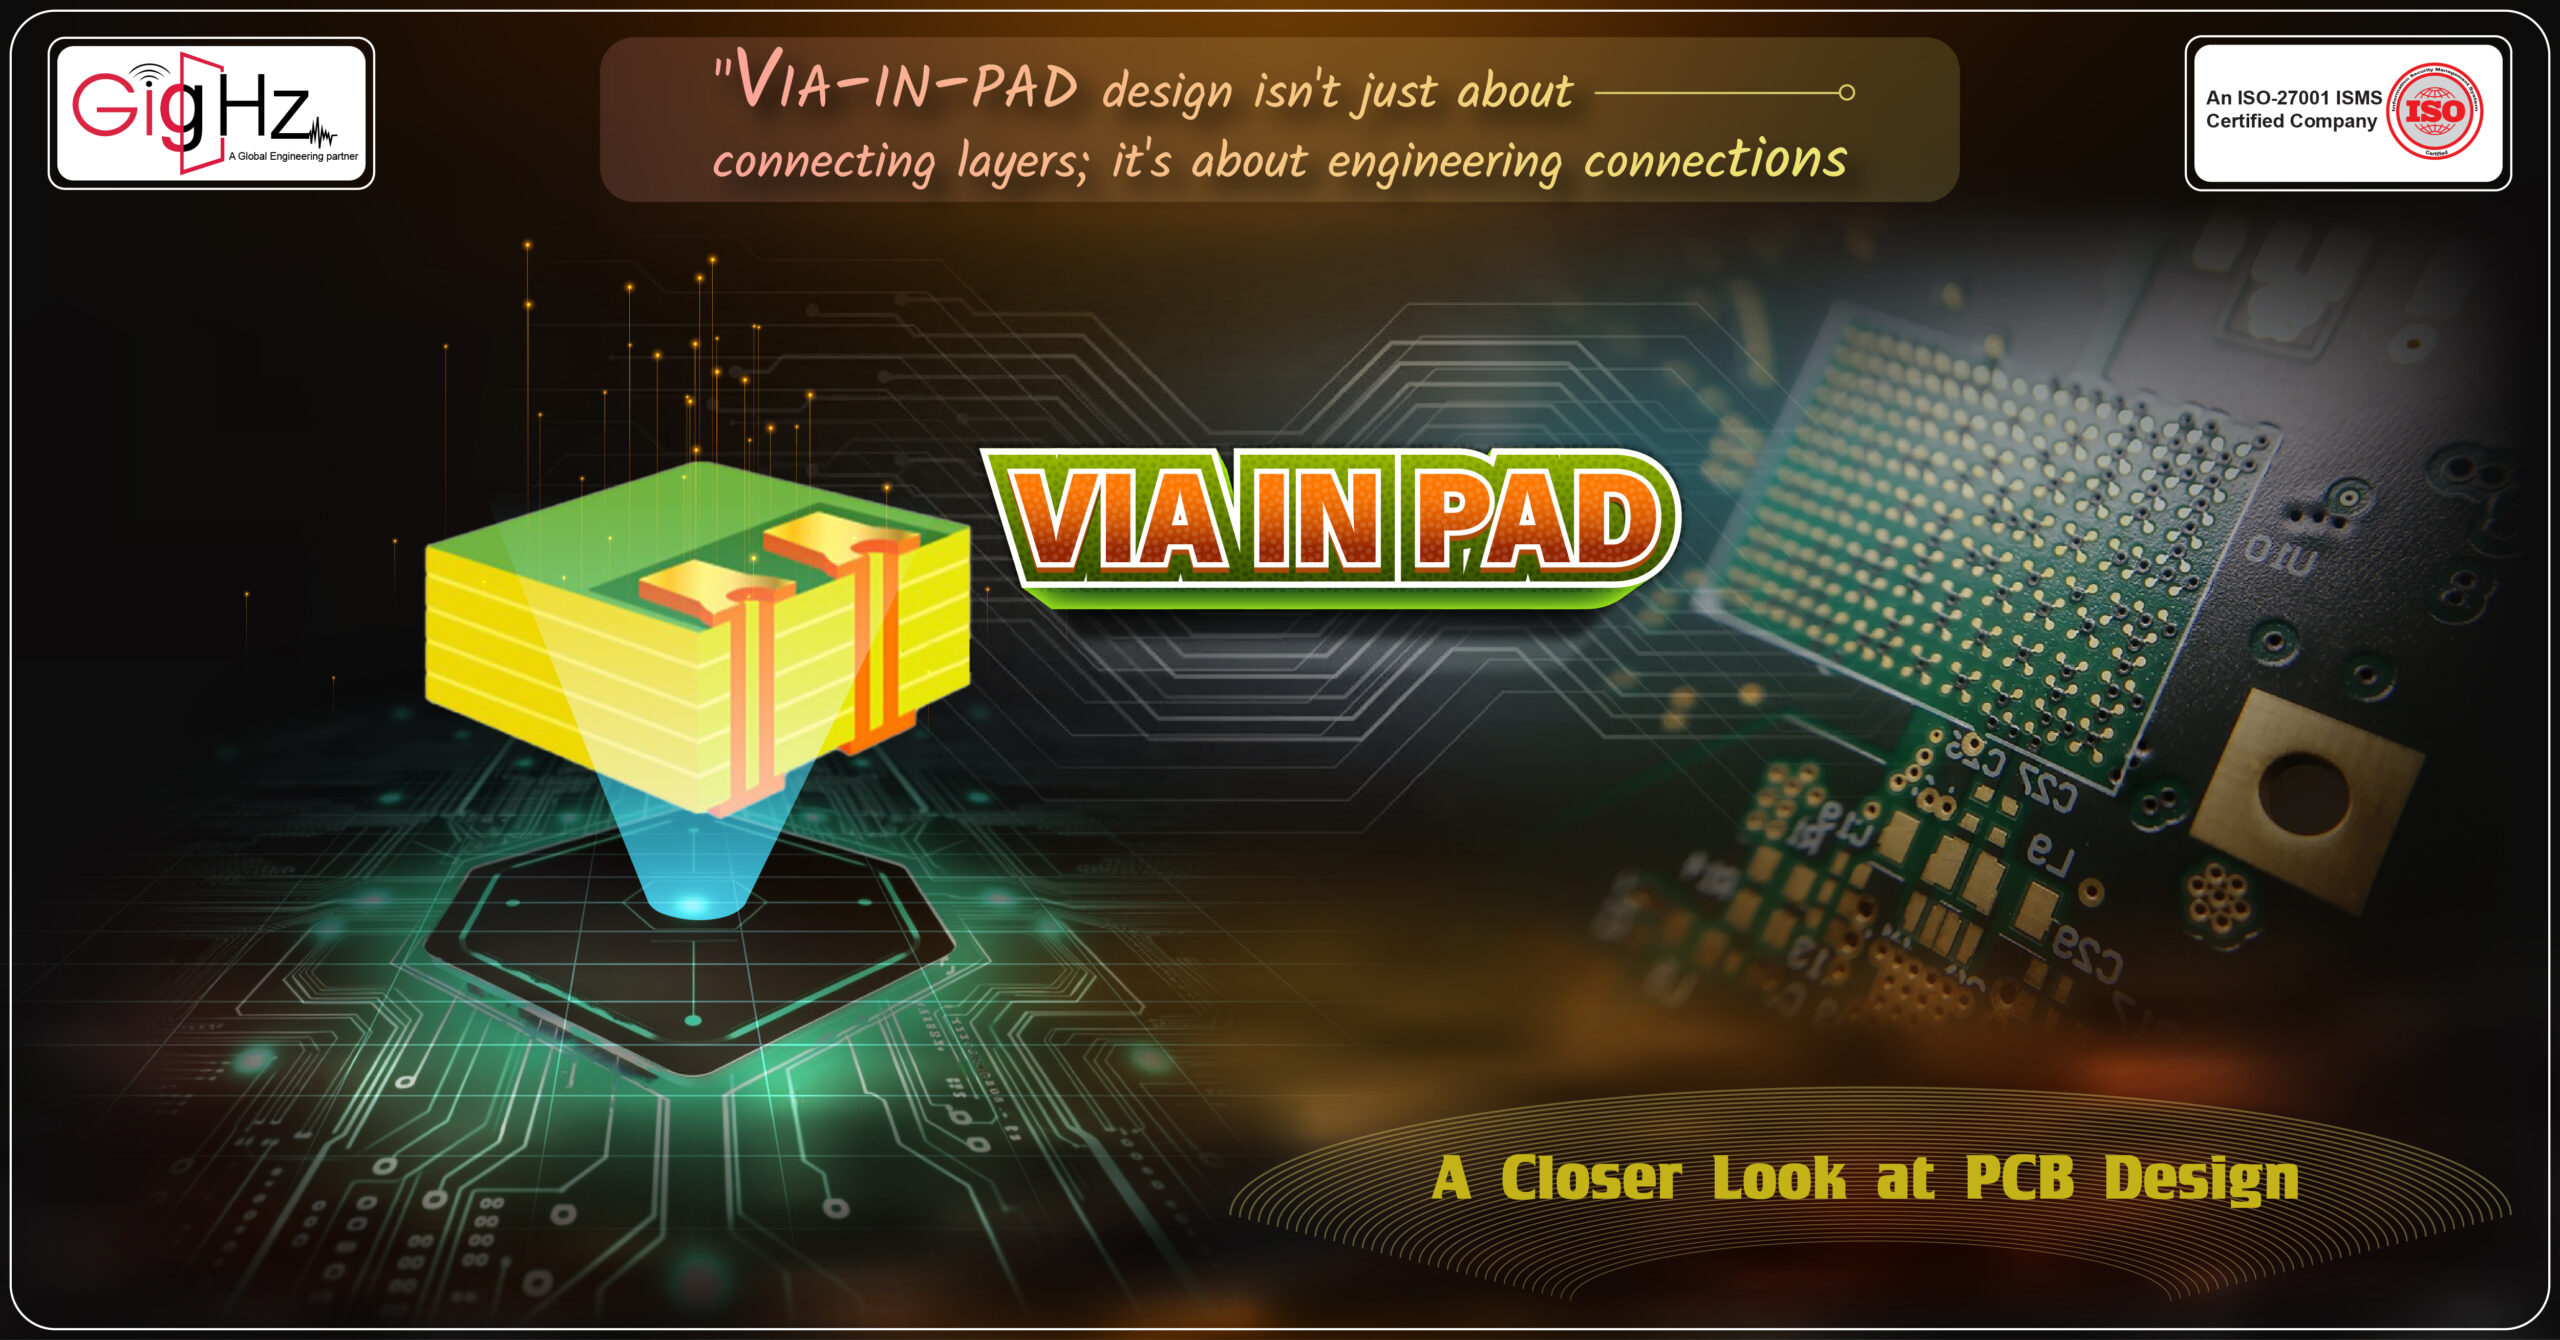 “VIP” Defined: A Closer Look at Printed Circuit Board(pcb) Design